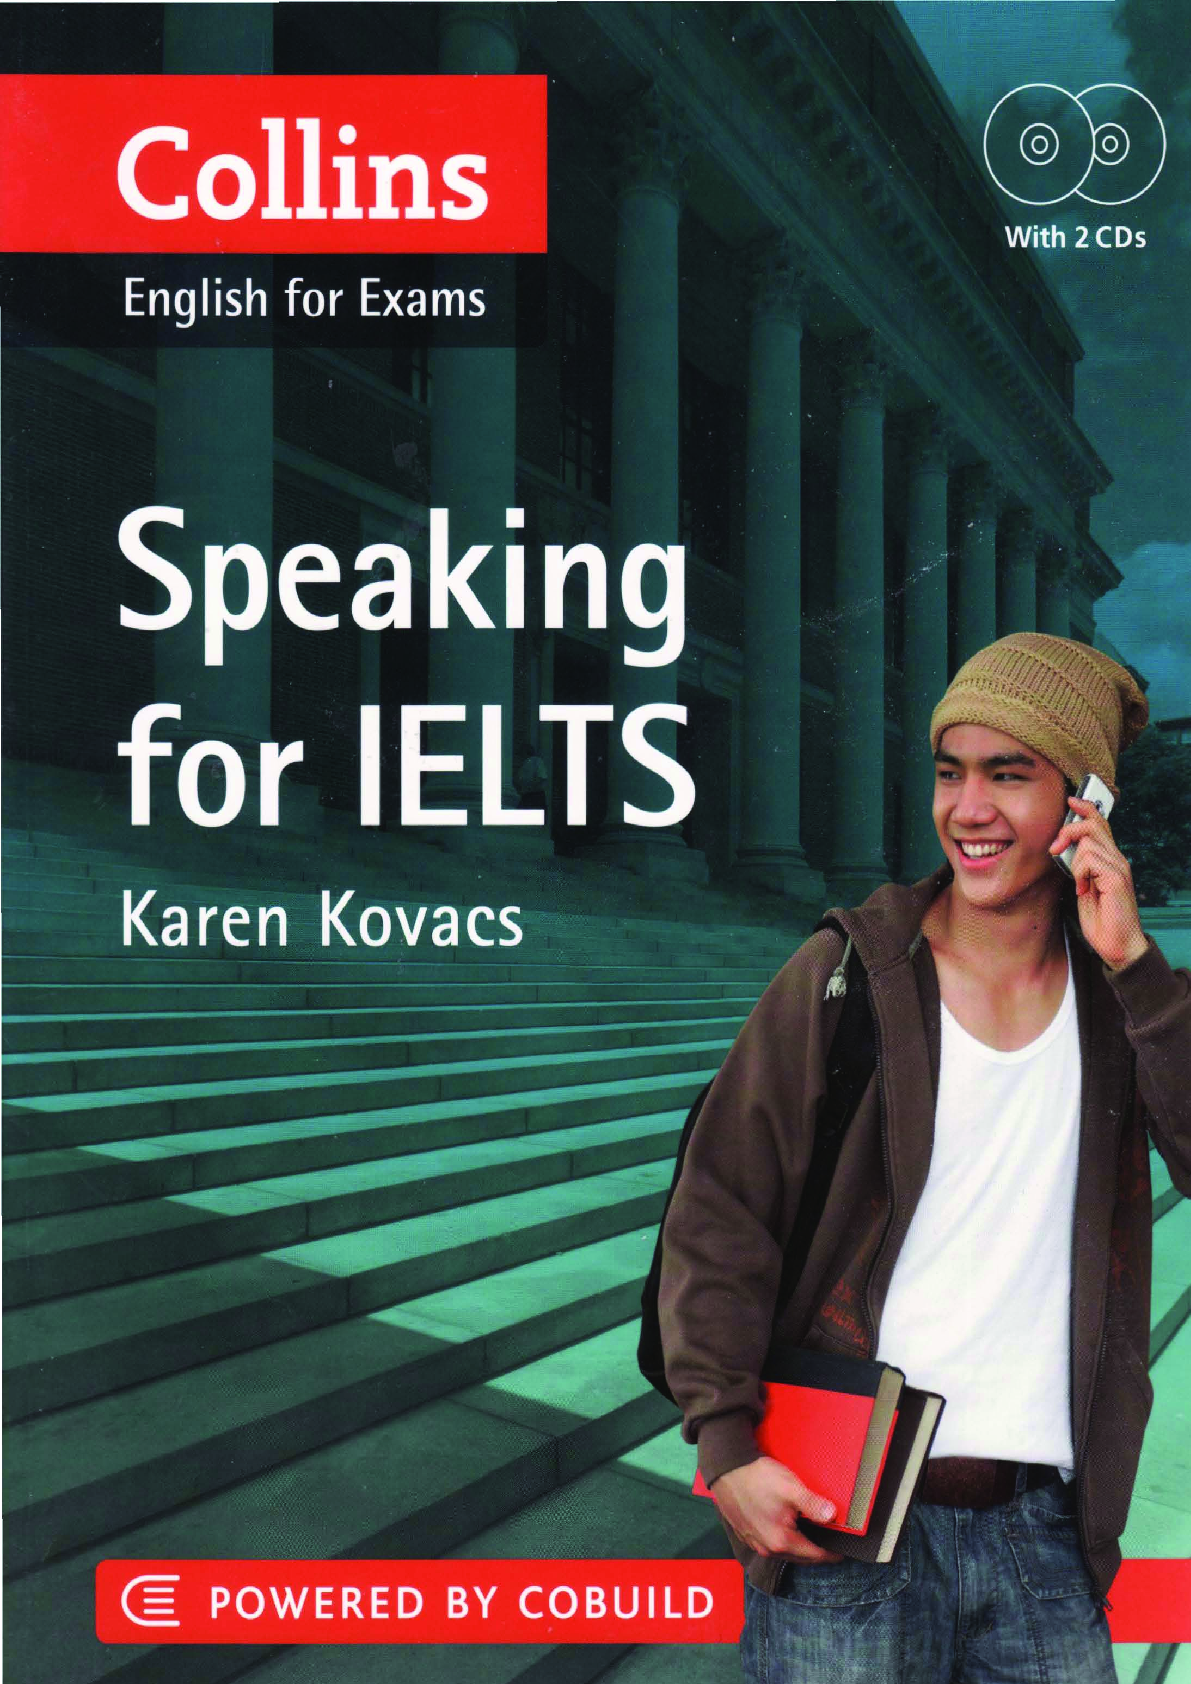 Sách Collins Speaking for IELTS pdf | Xem online, tải PDF miễn phí (trang 1)